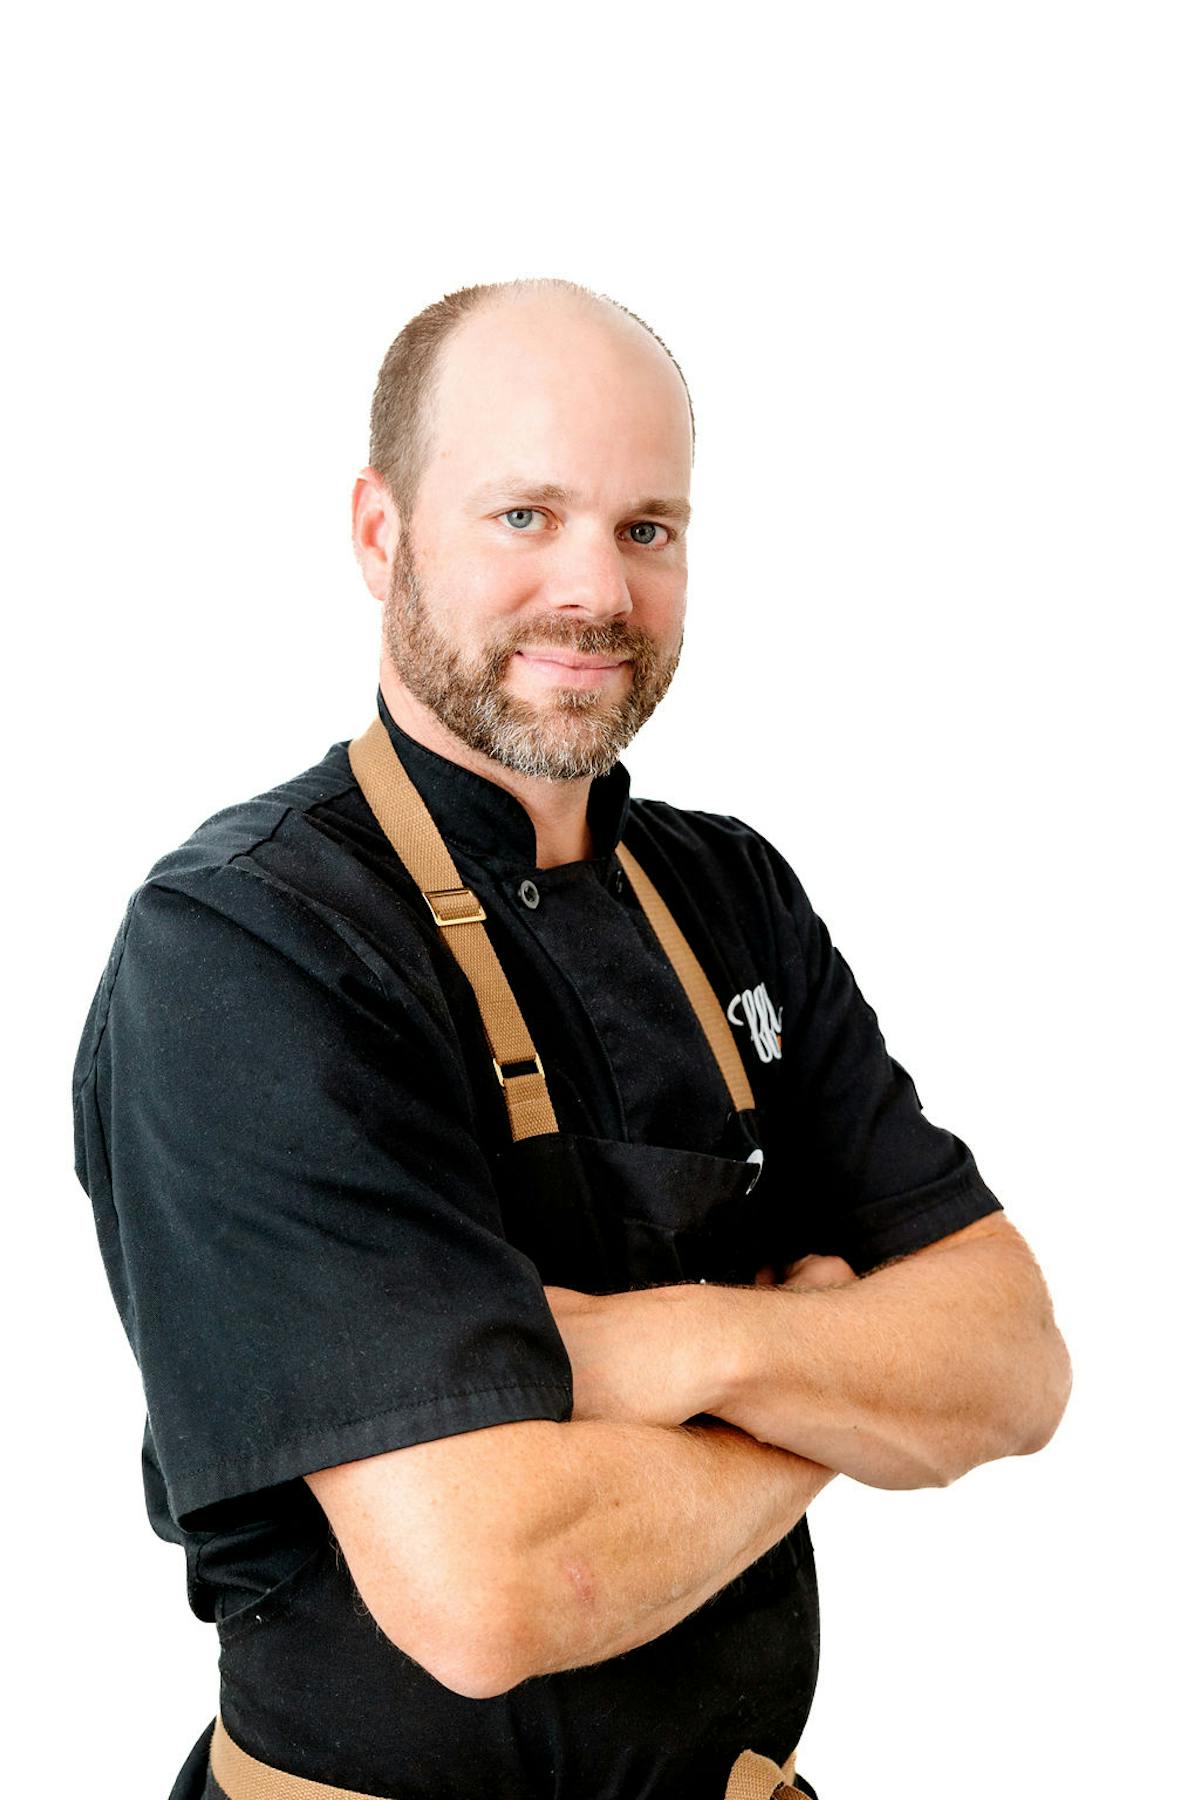 Truffles Fine Foods culinary director Tret Jordan headshot in chef uniform